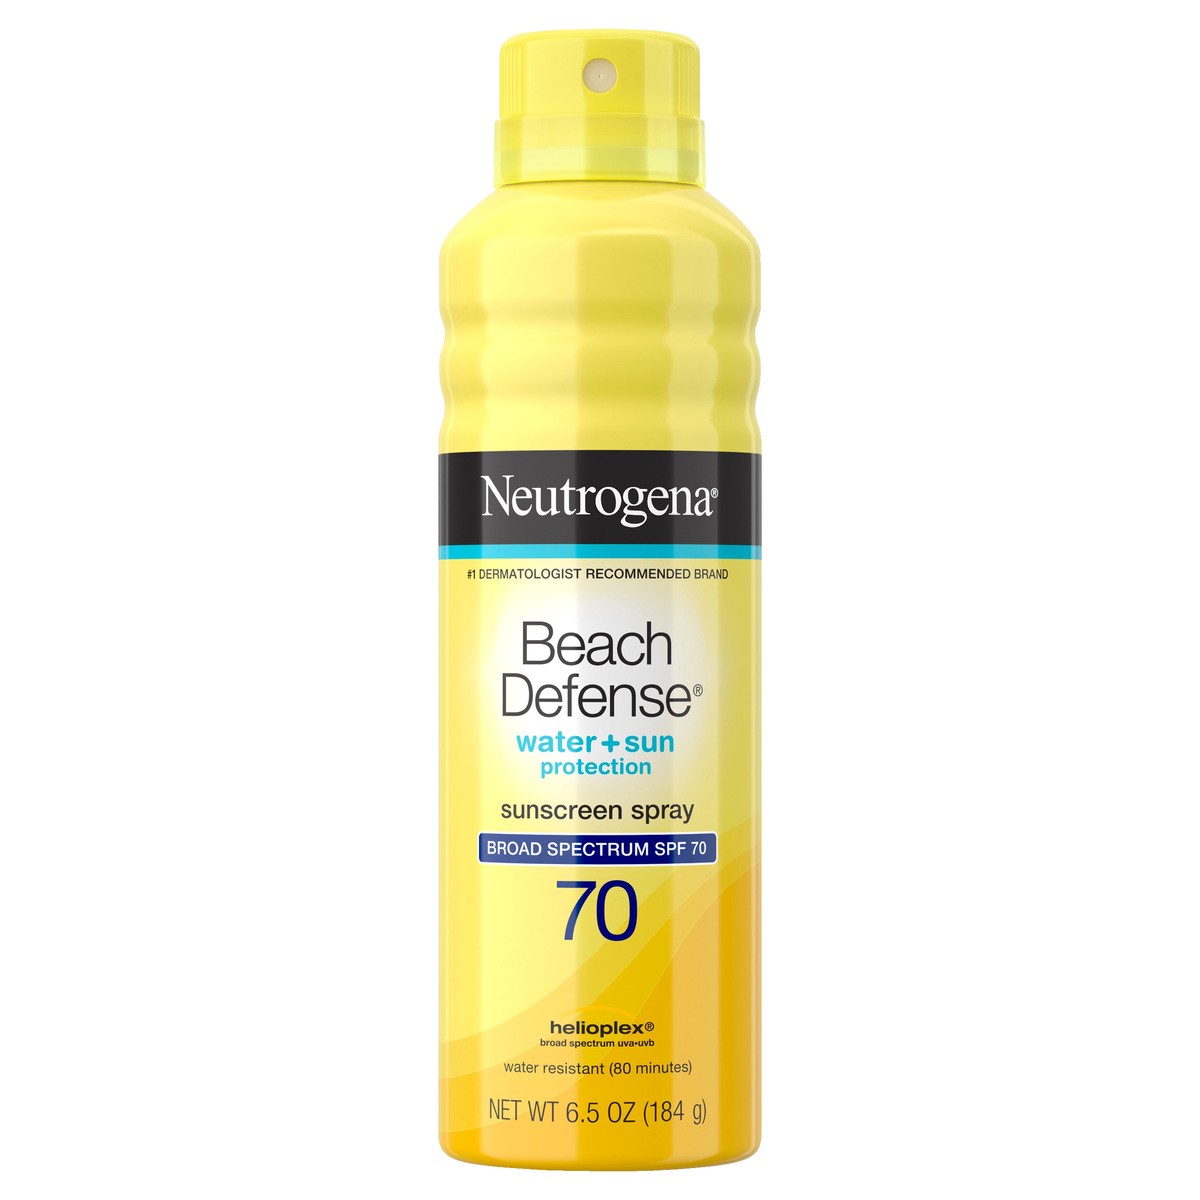 slide 8 of 8, Neutrogena Beach Defense Spray Sunscreen with Broad Spectrum SPF 70, Fast Absorbing Sunscreen Body Spray Mist, Water-Resistant UVA/UVB Sun Protection, Oxybenzone Free, 6.5 oz, 6.5 oz